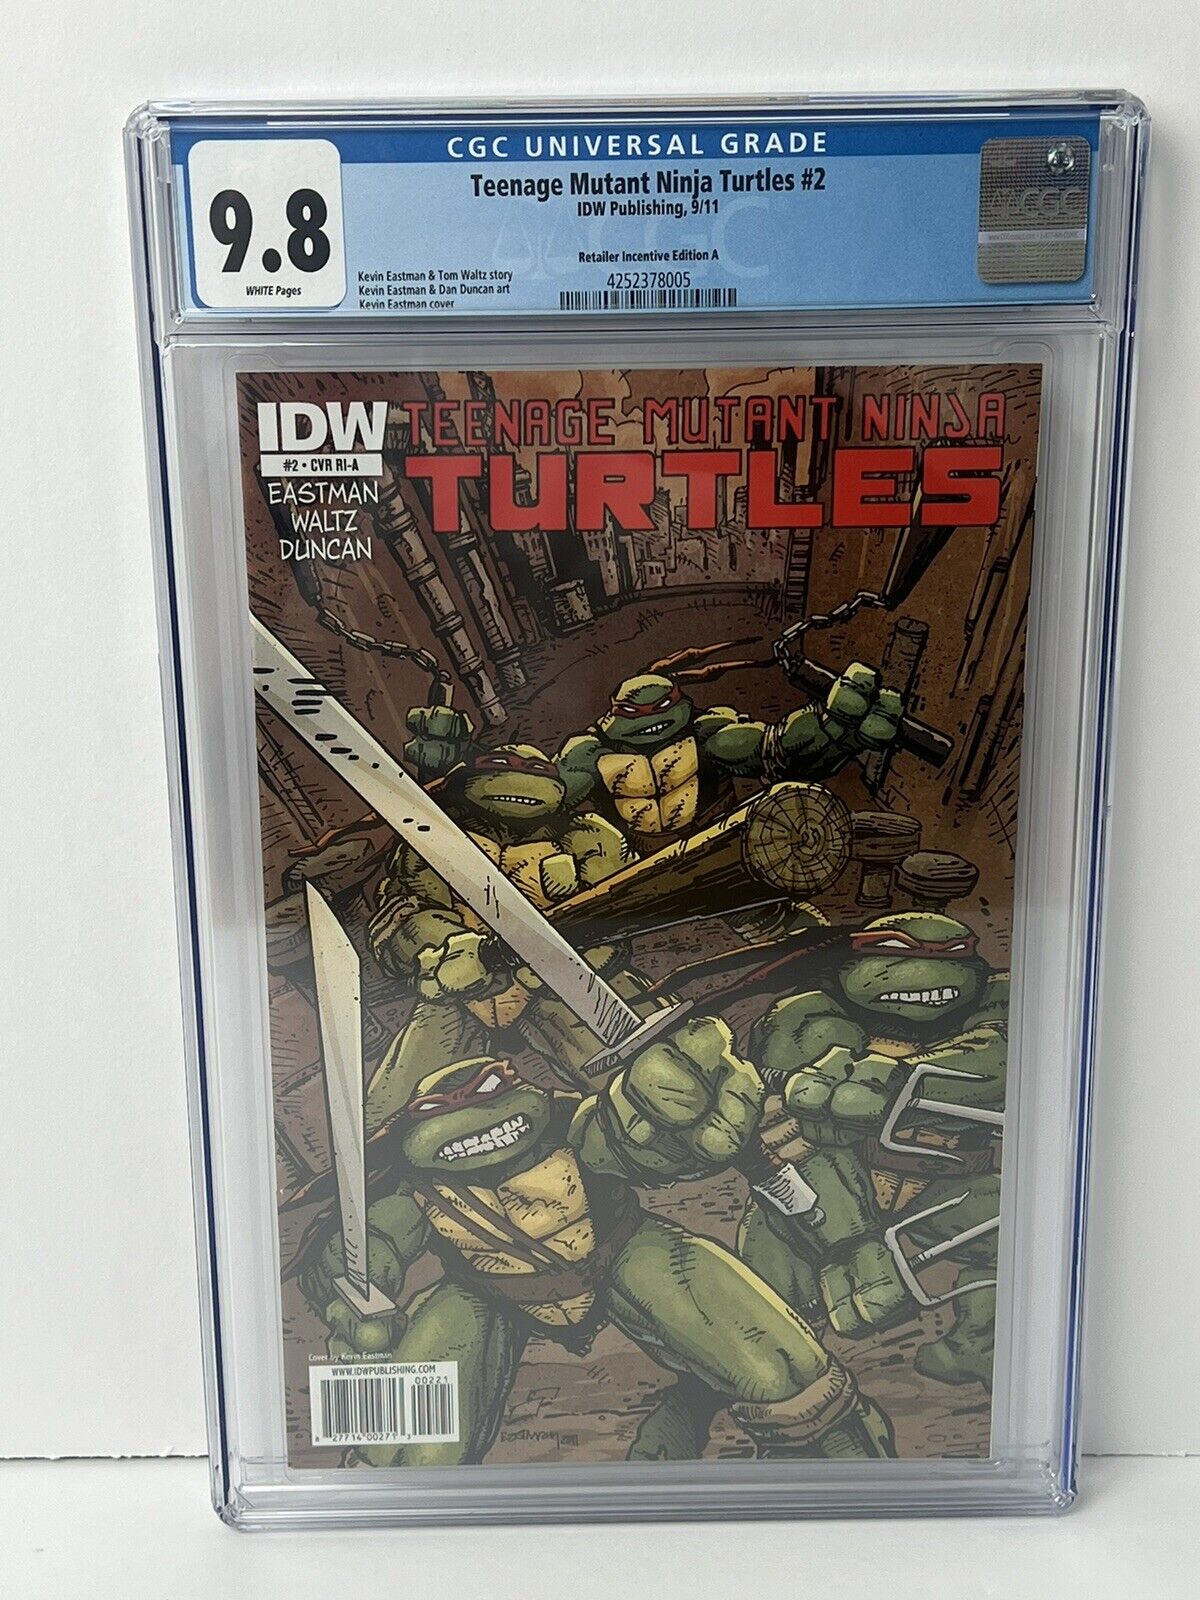 Teenage Mutant Ninja Turtles #2 IDW 2011 Comic Book Retailer Incentive Edition A